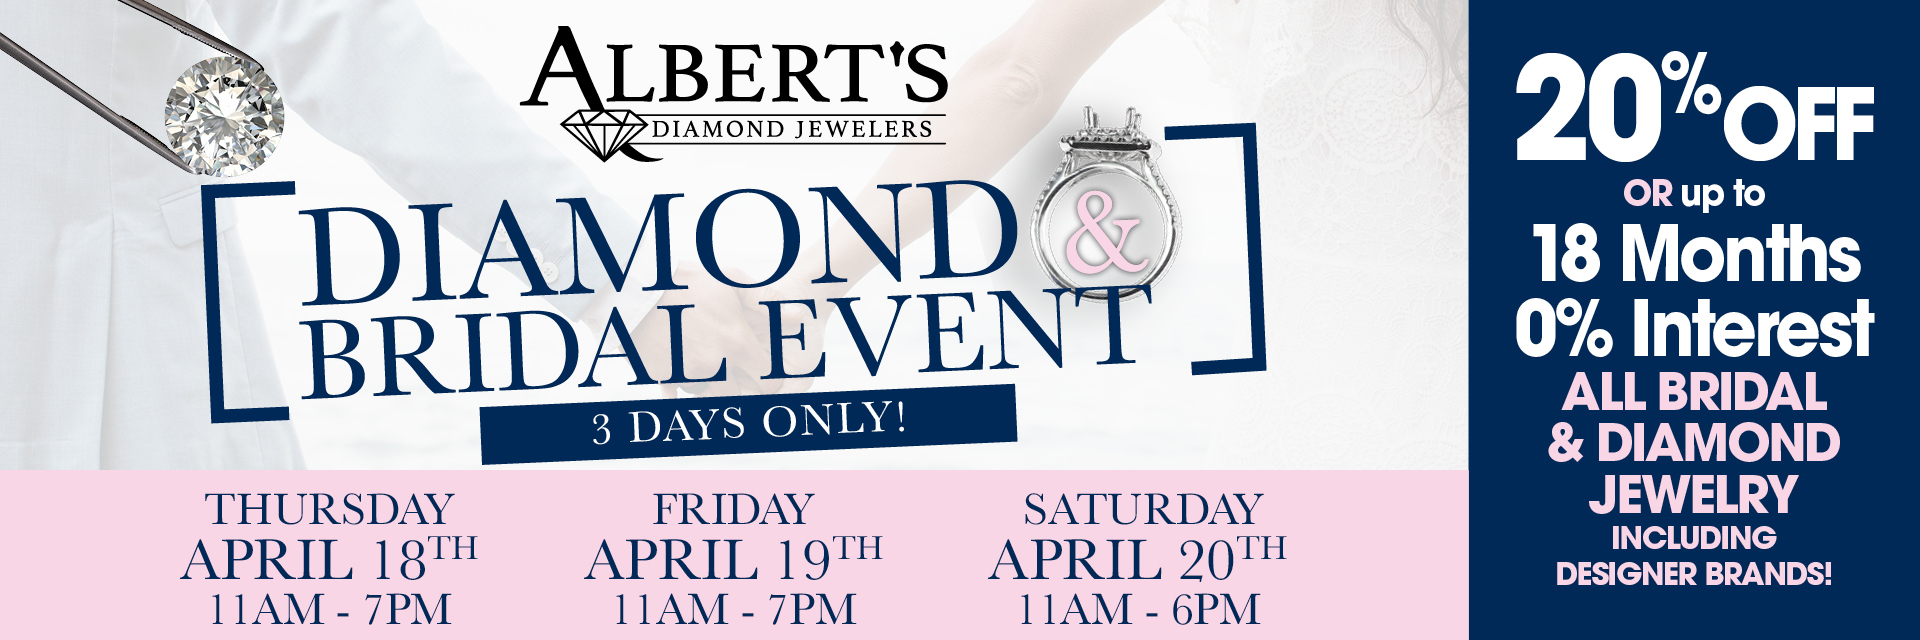 Albert's Diamond and Bridal Event